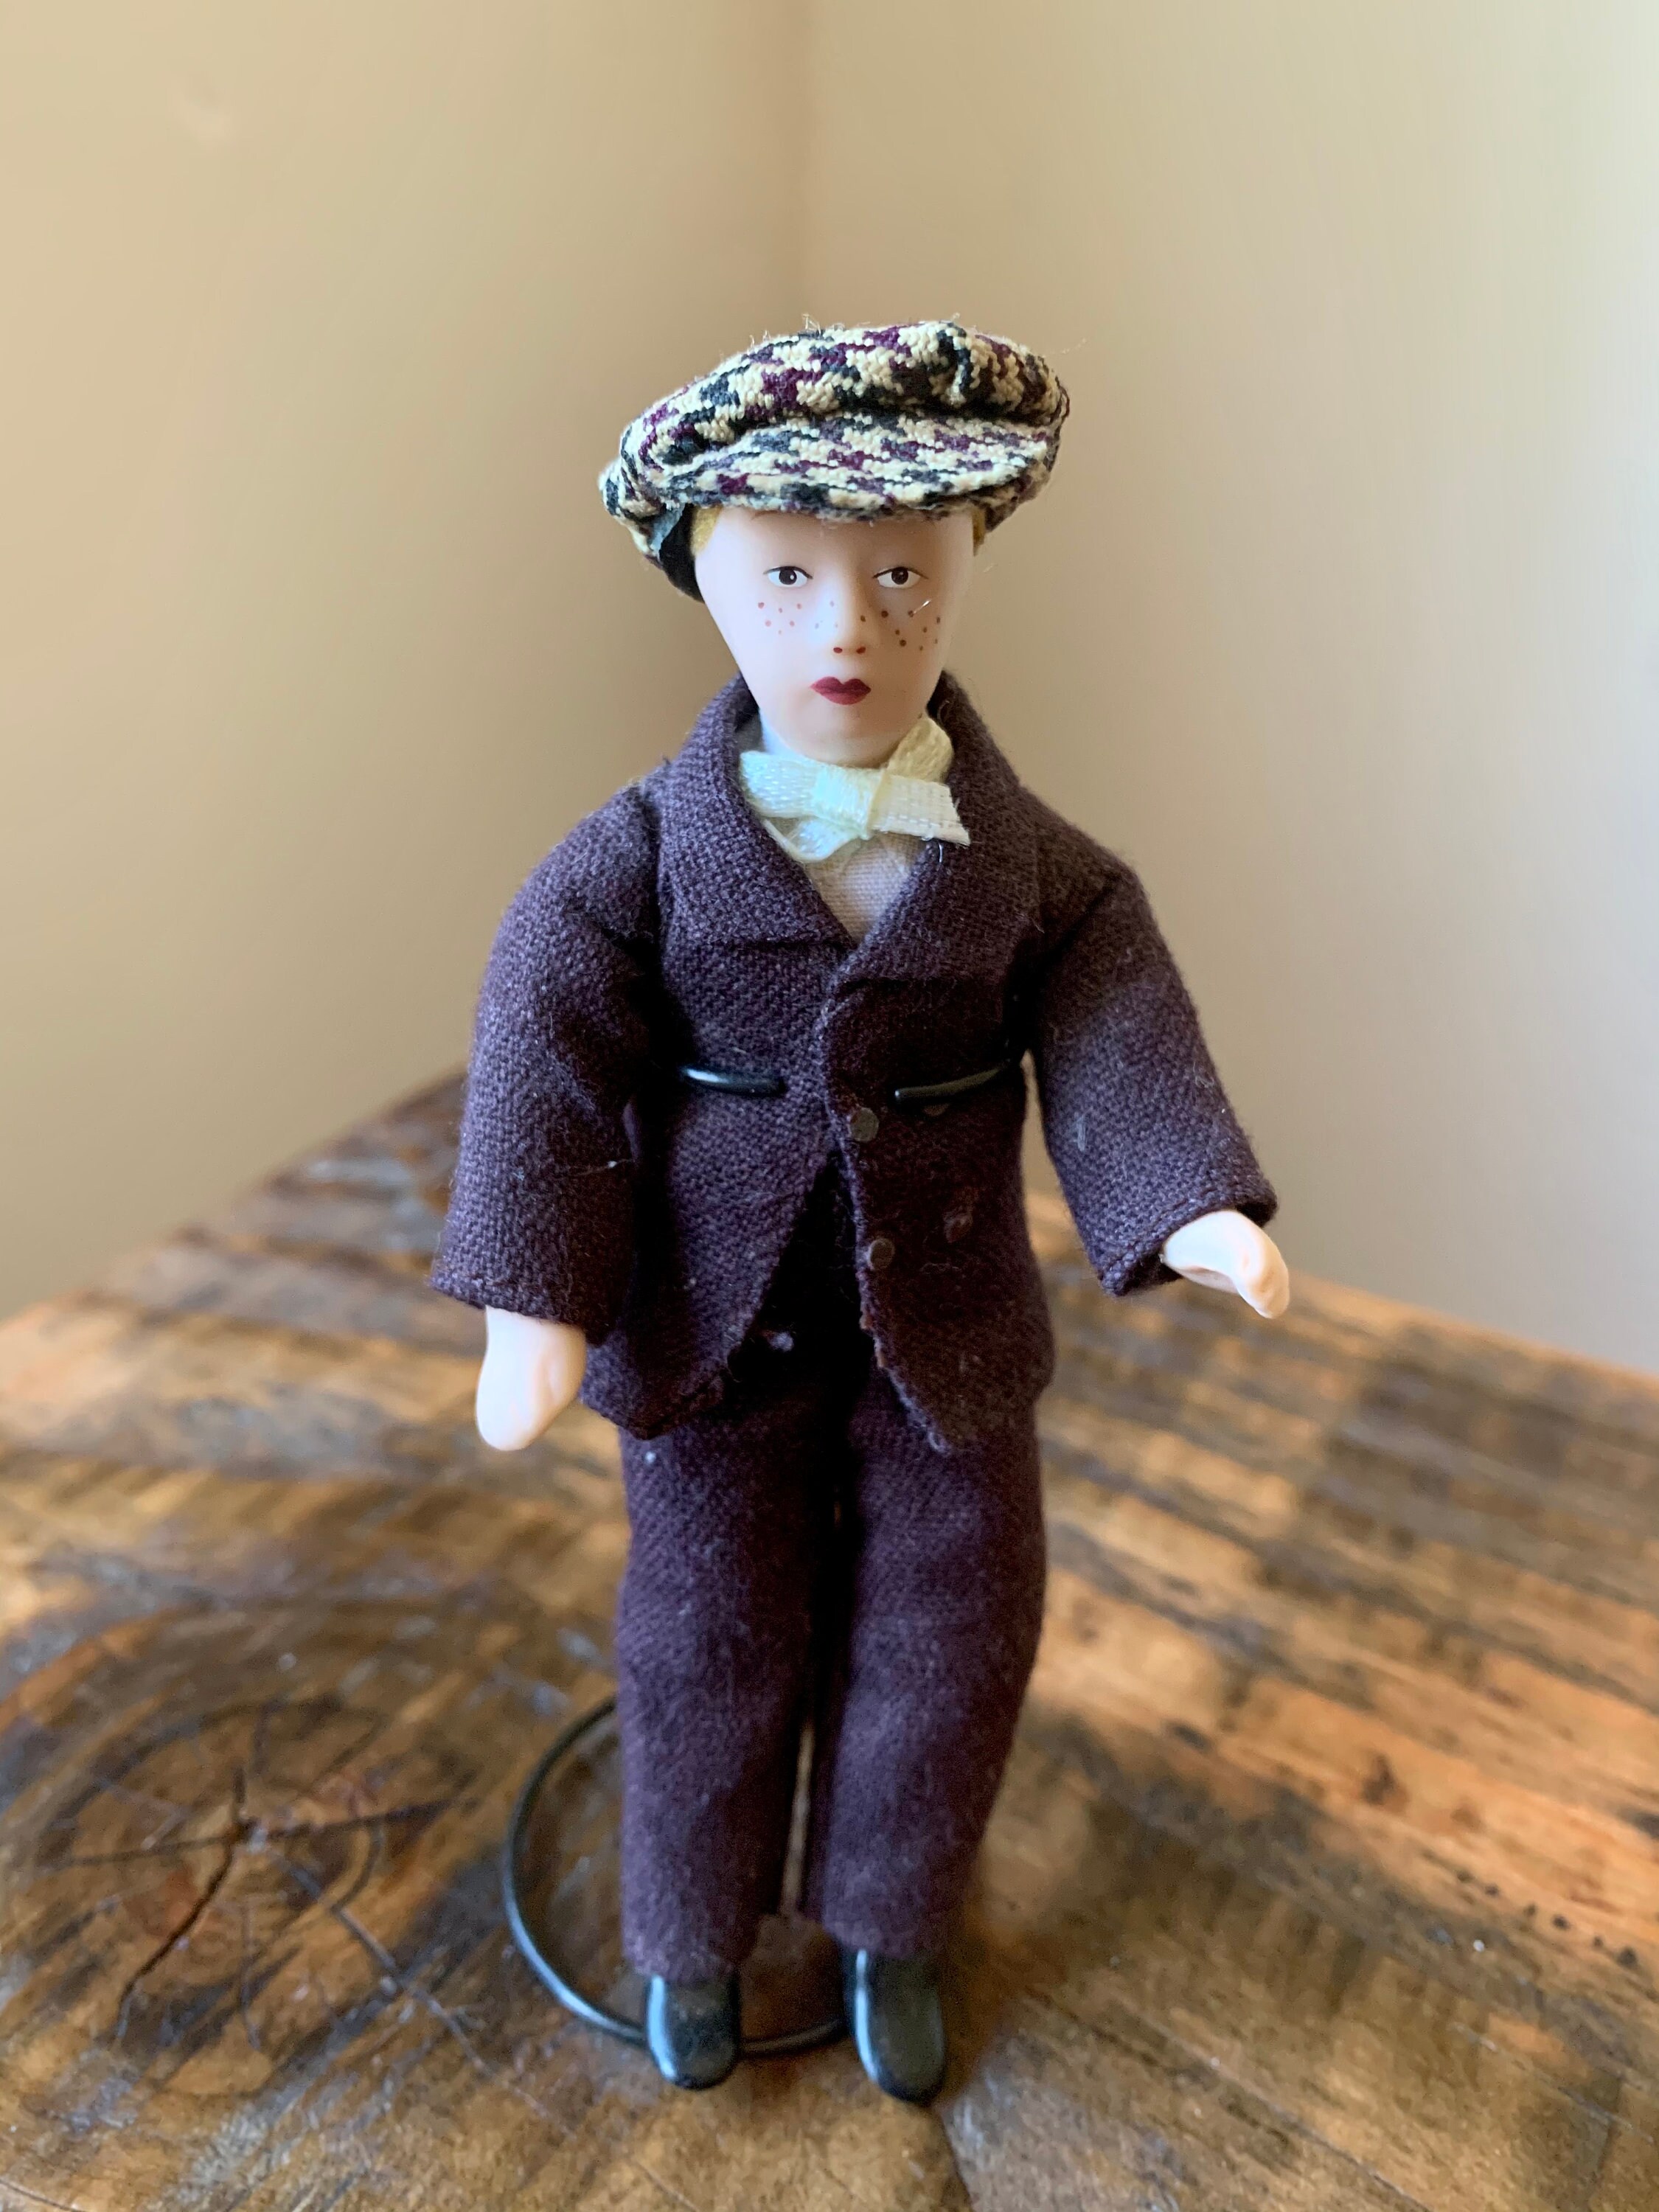 Vintage Del Prado 1:12th Scale Dolls House Boy Figurine | Etsy